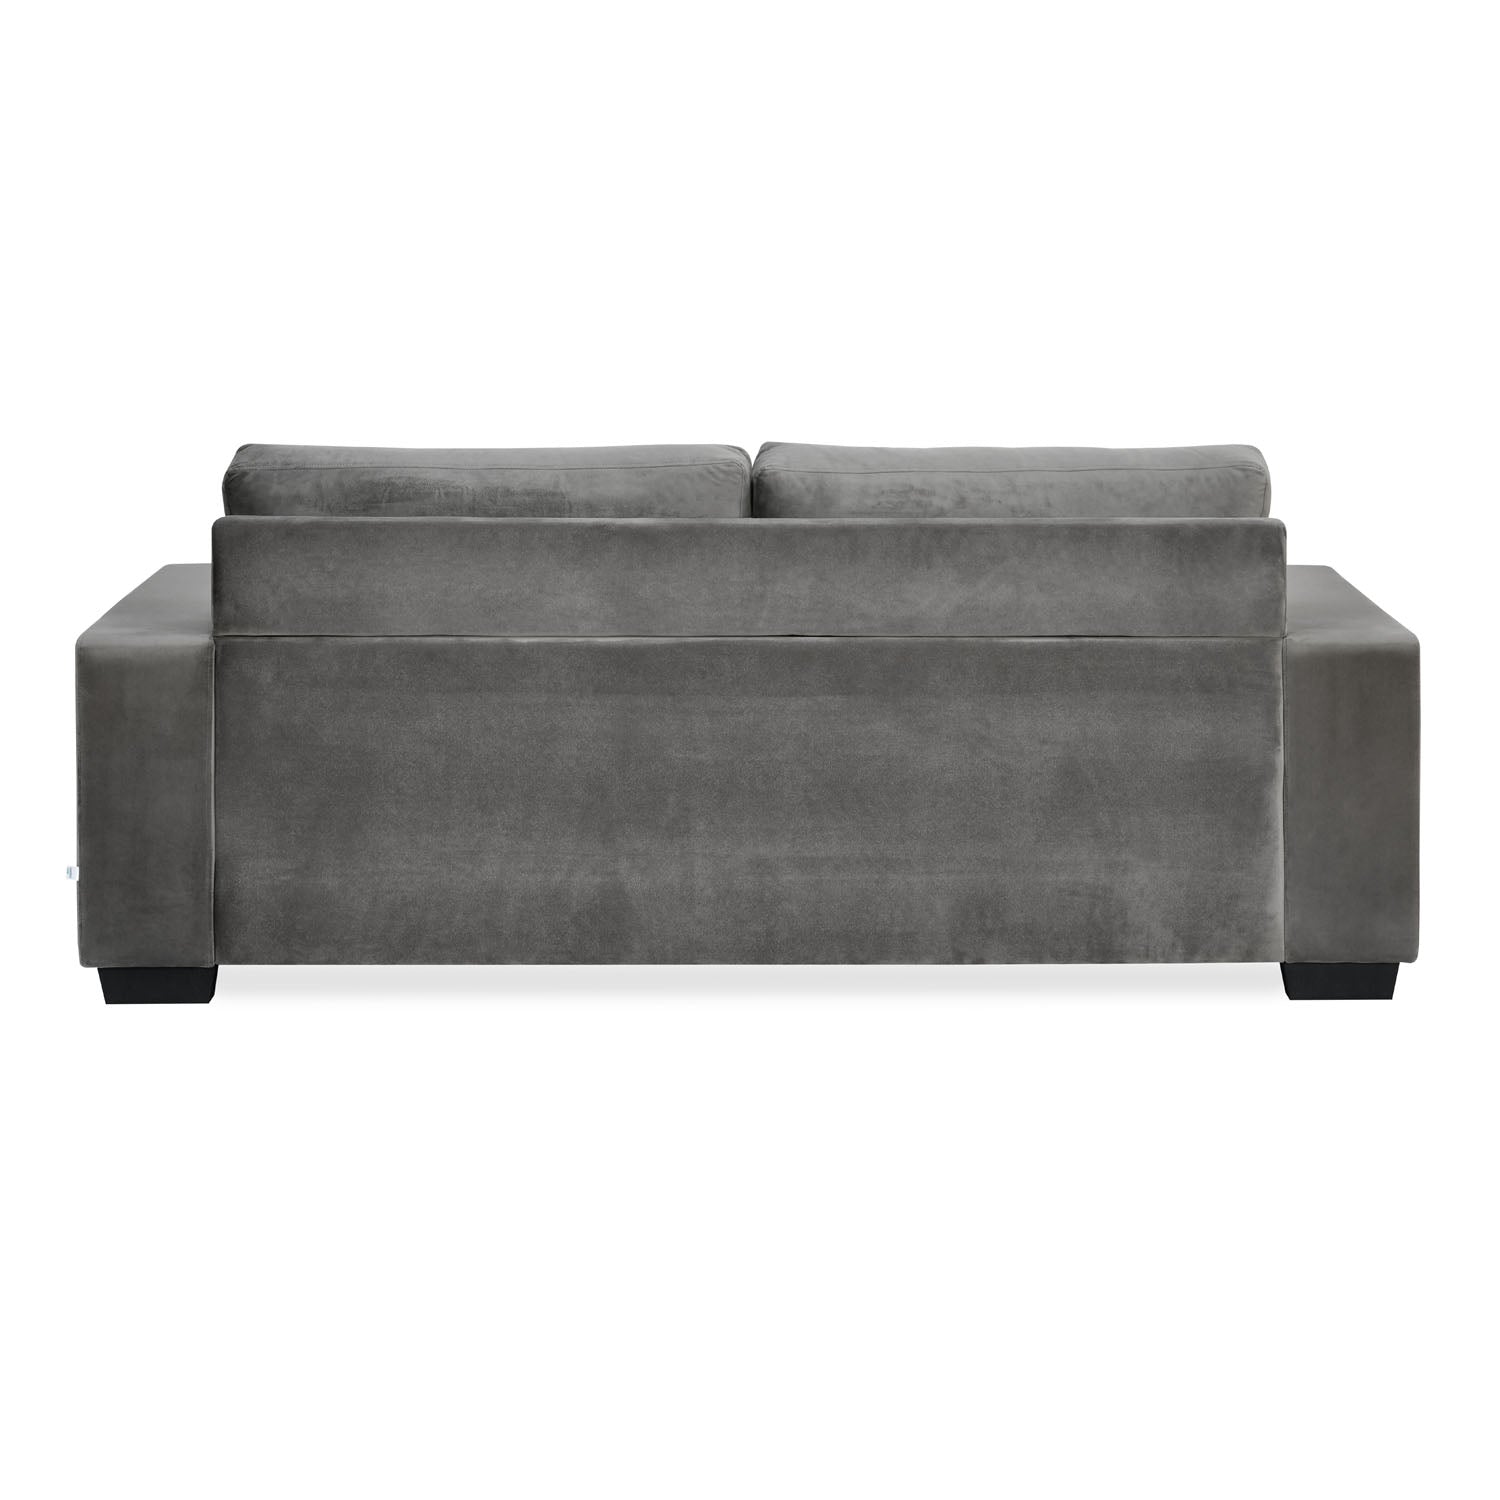 Charley 3 Seater Fabric Sofa (Light Grey)